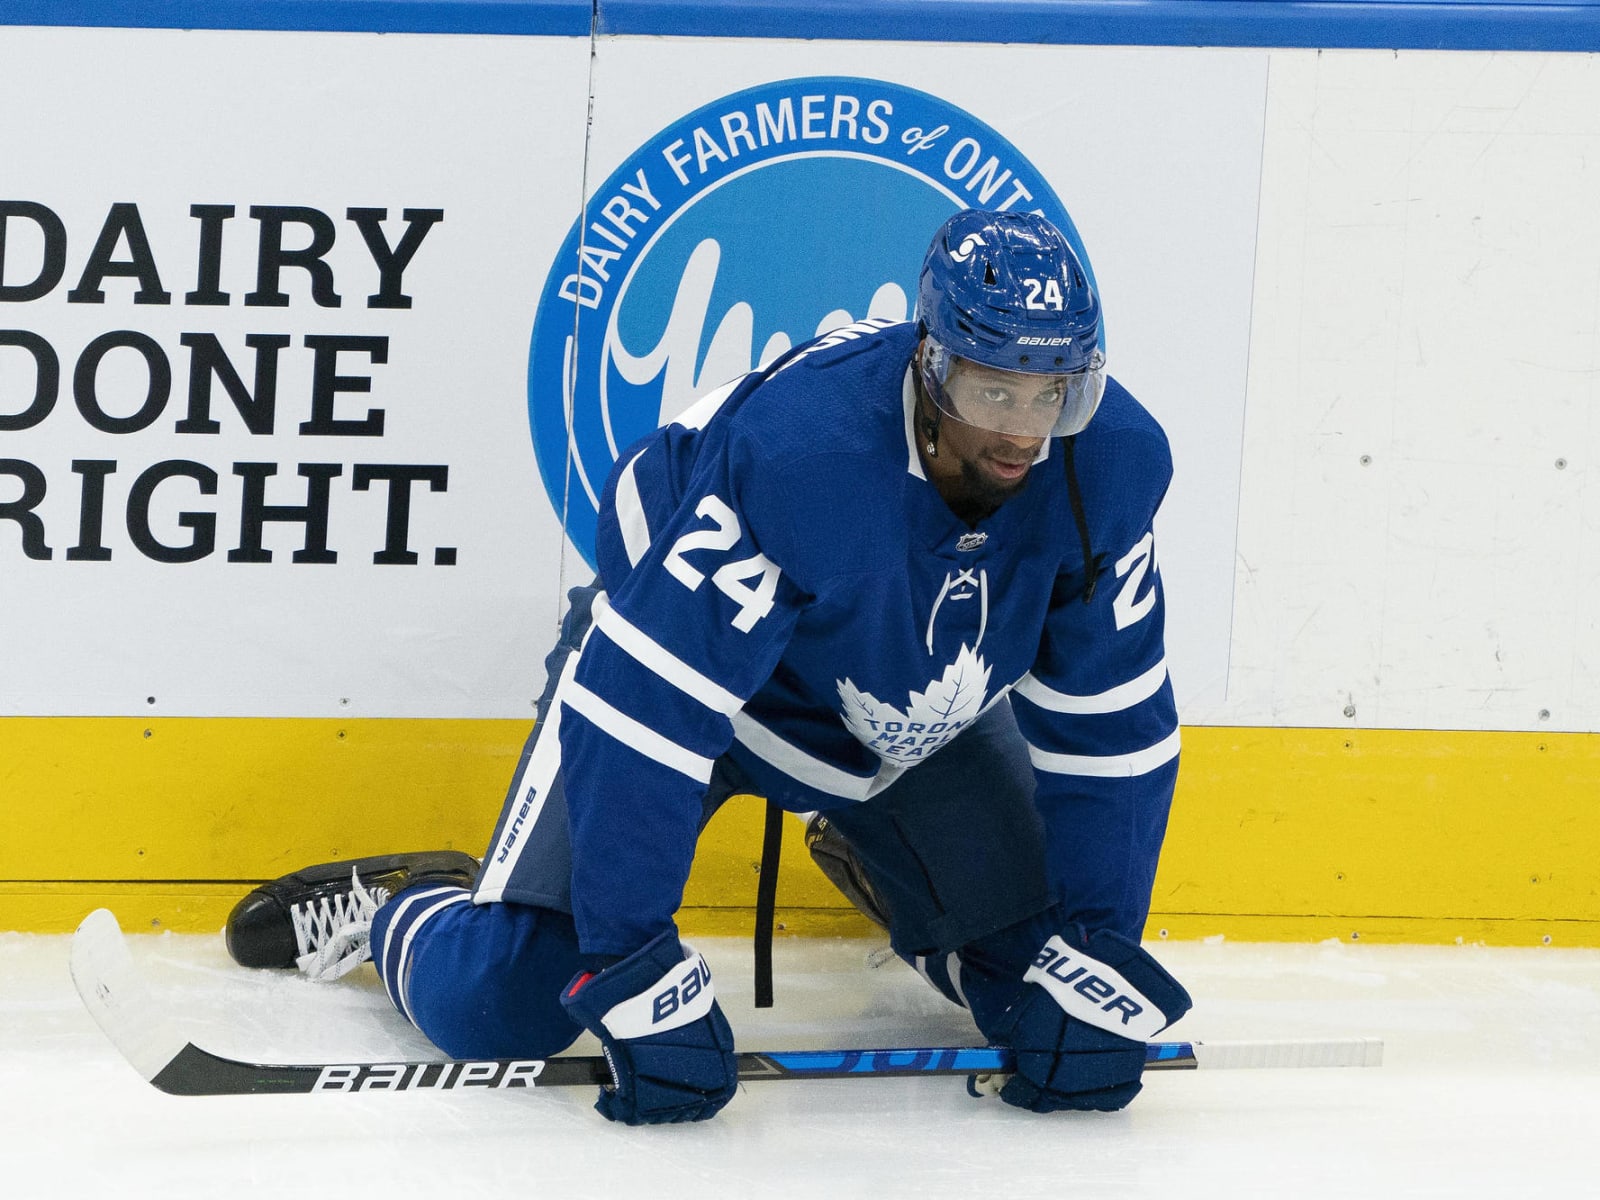 Wayne Simmonds injury update: Maple Leafs forward out six weeks